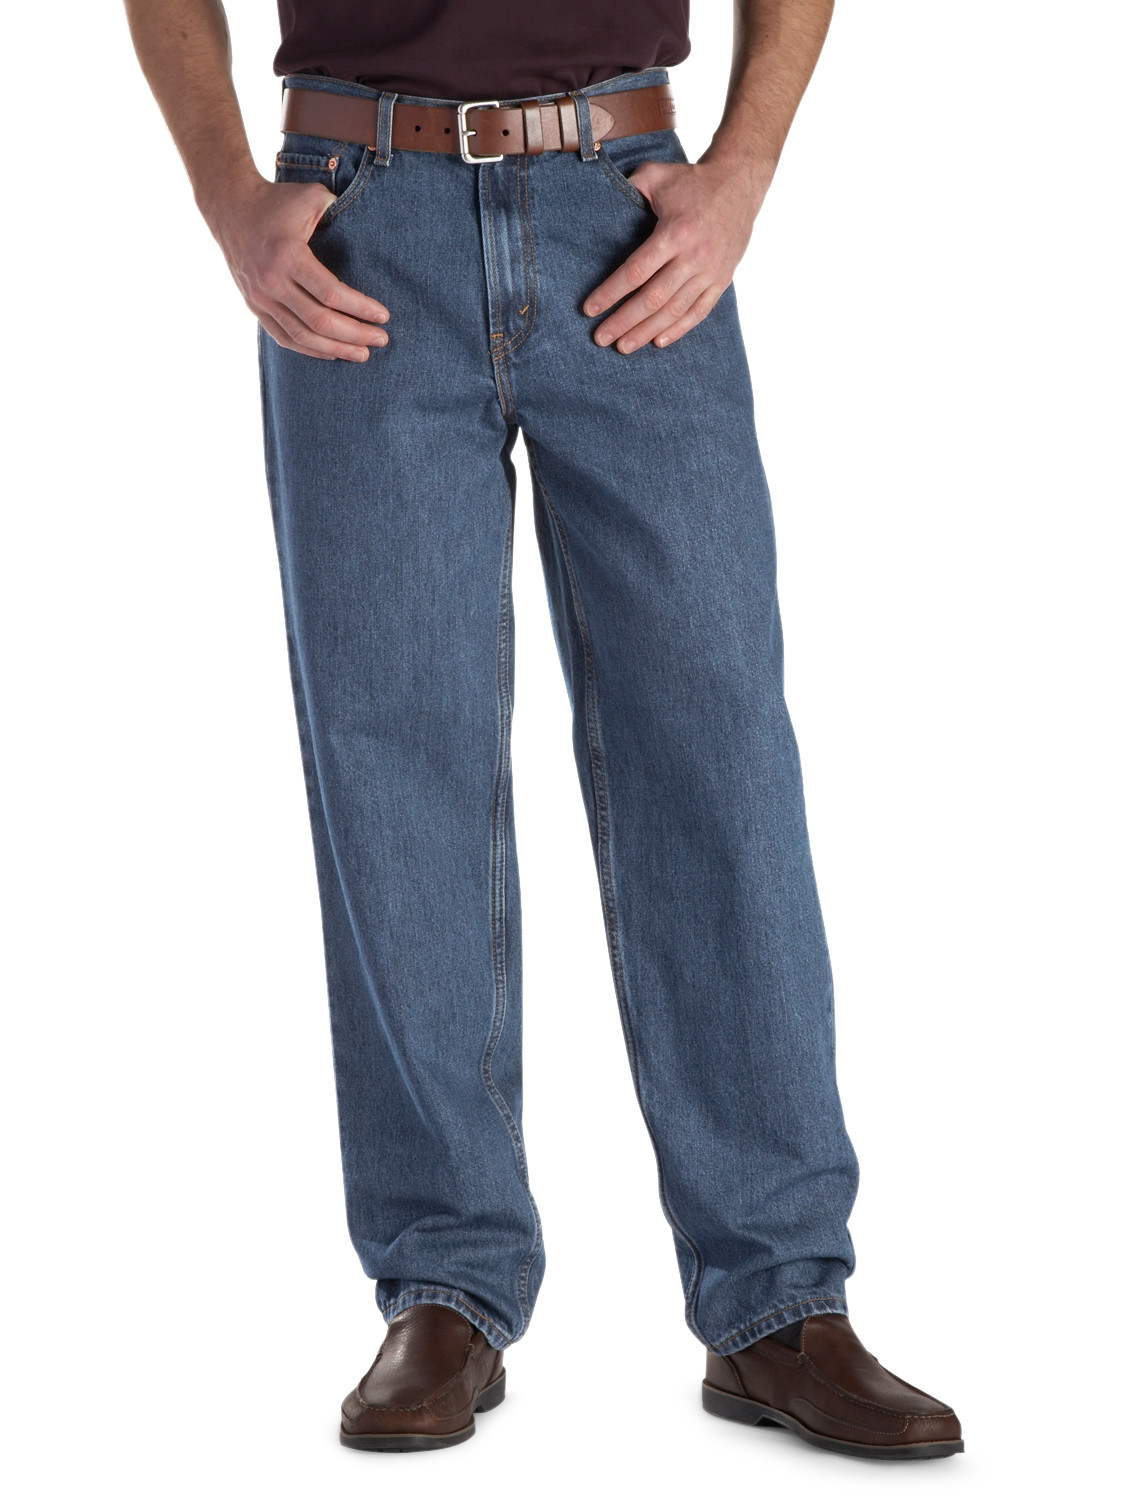 levis 560 stretch jeans